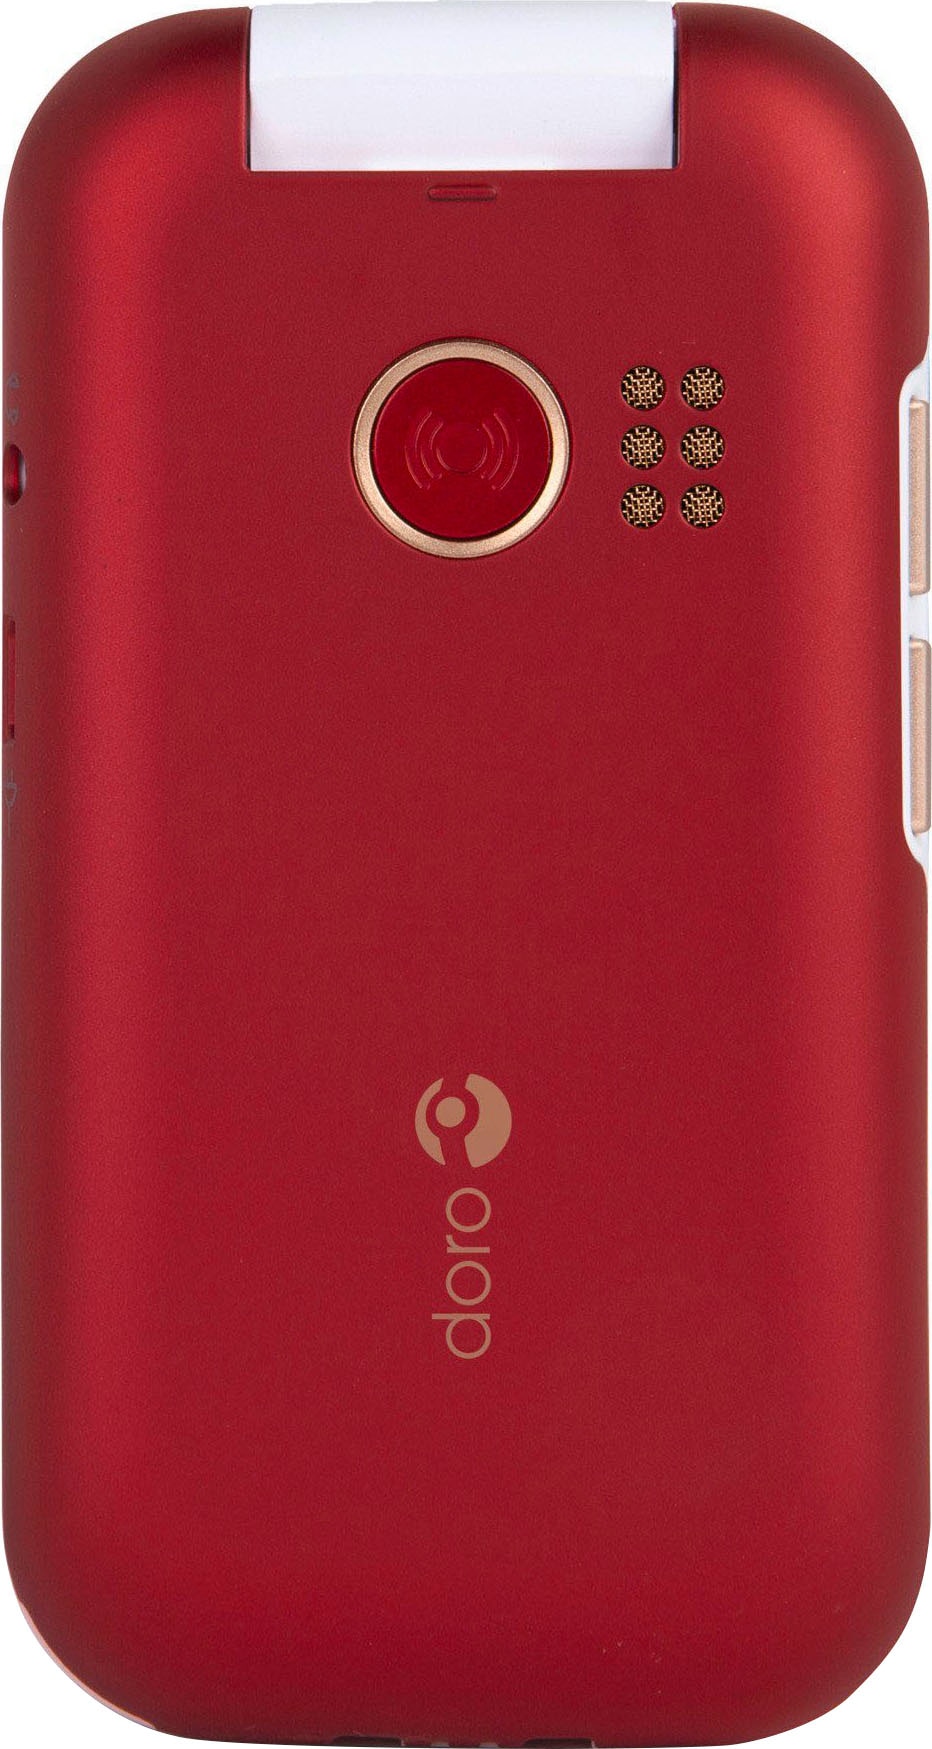 Handy OTTO MP kaufen »6060«, Kamera Zoll, jetzt bei cm/2,8 7,11 3 Doro rot,